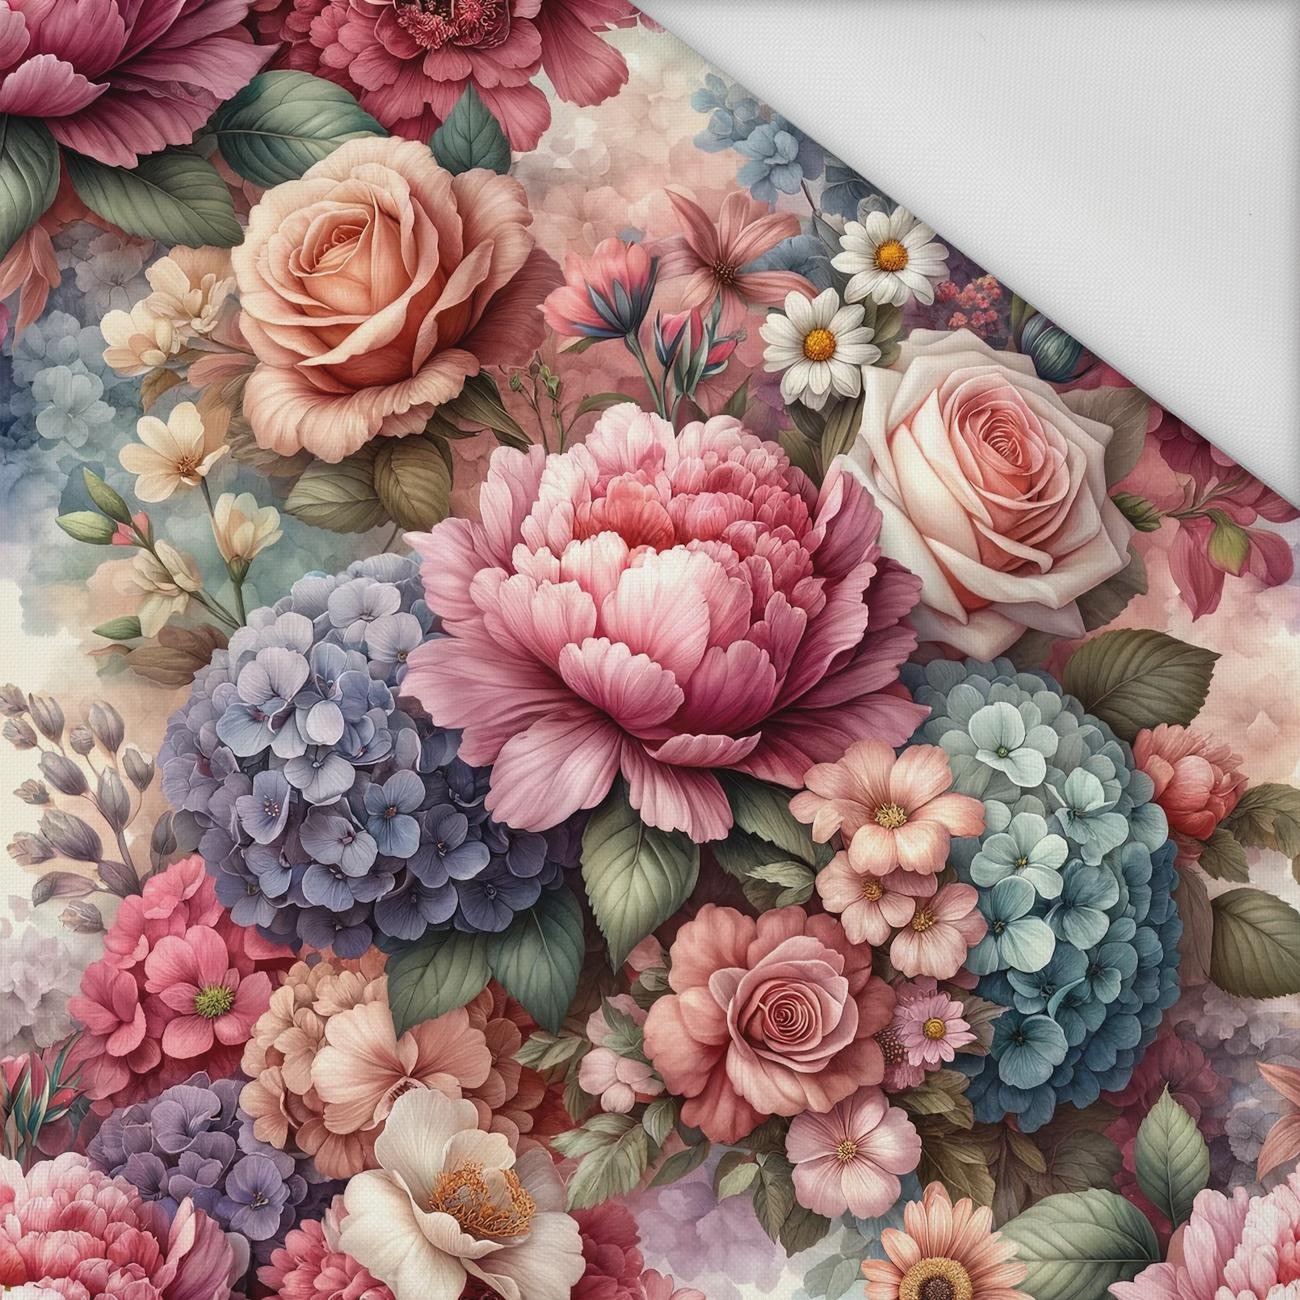 FLOWERS PAT. 2 - Waterproof woven fabric